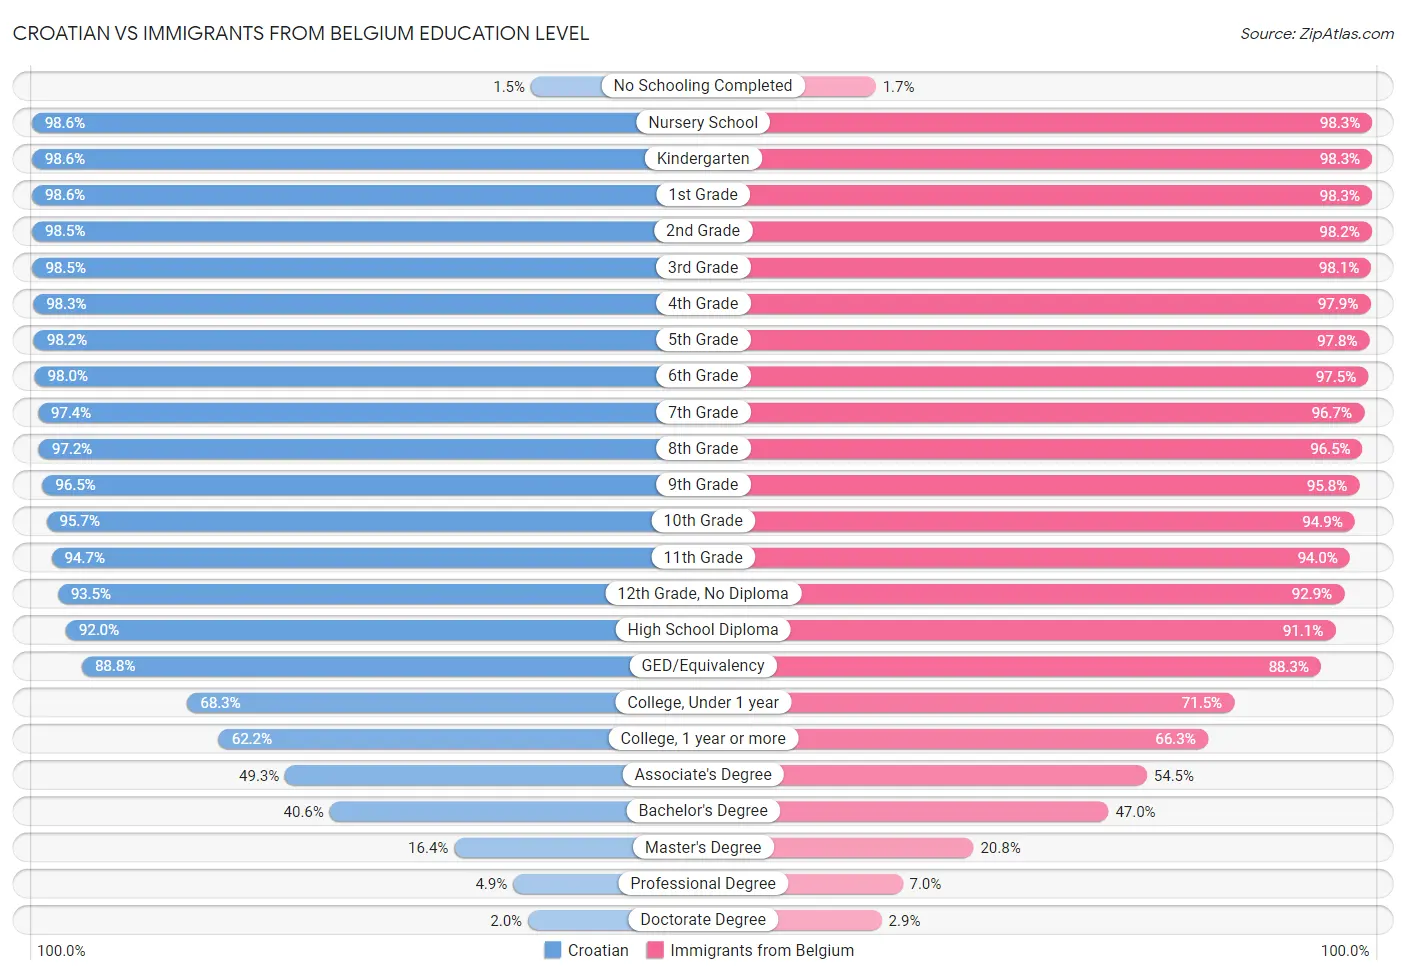 Croatian vs Immigrants from Belgium Education Level